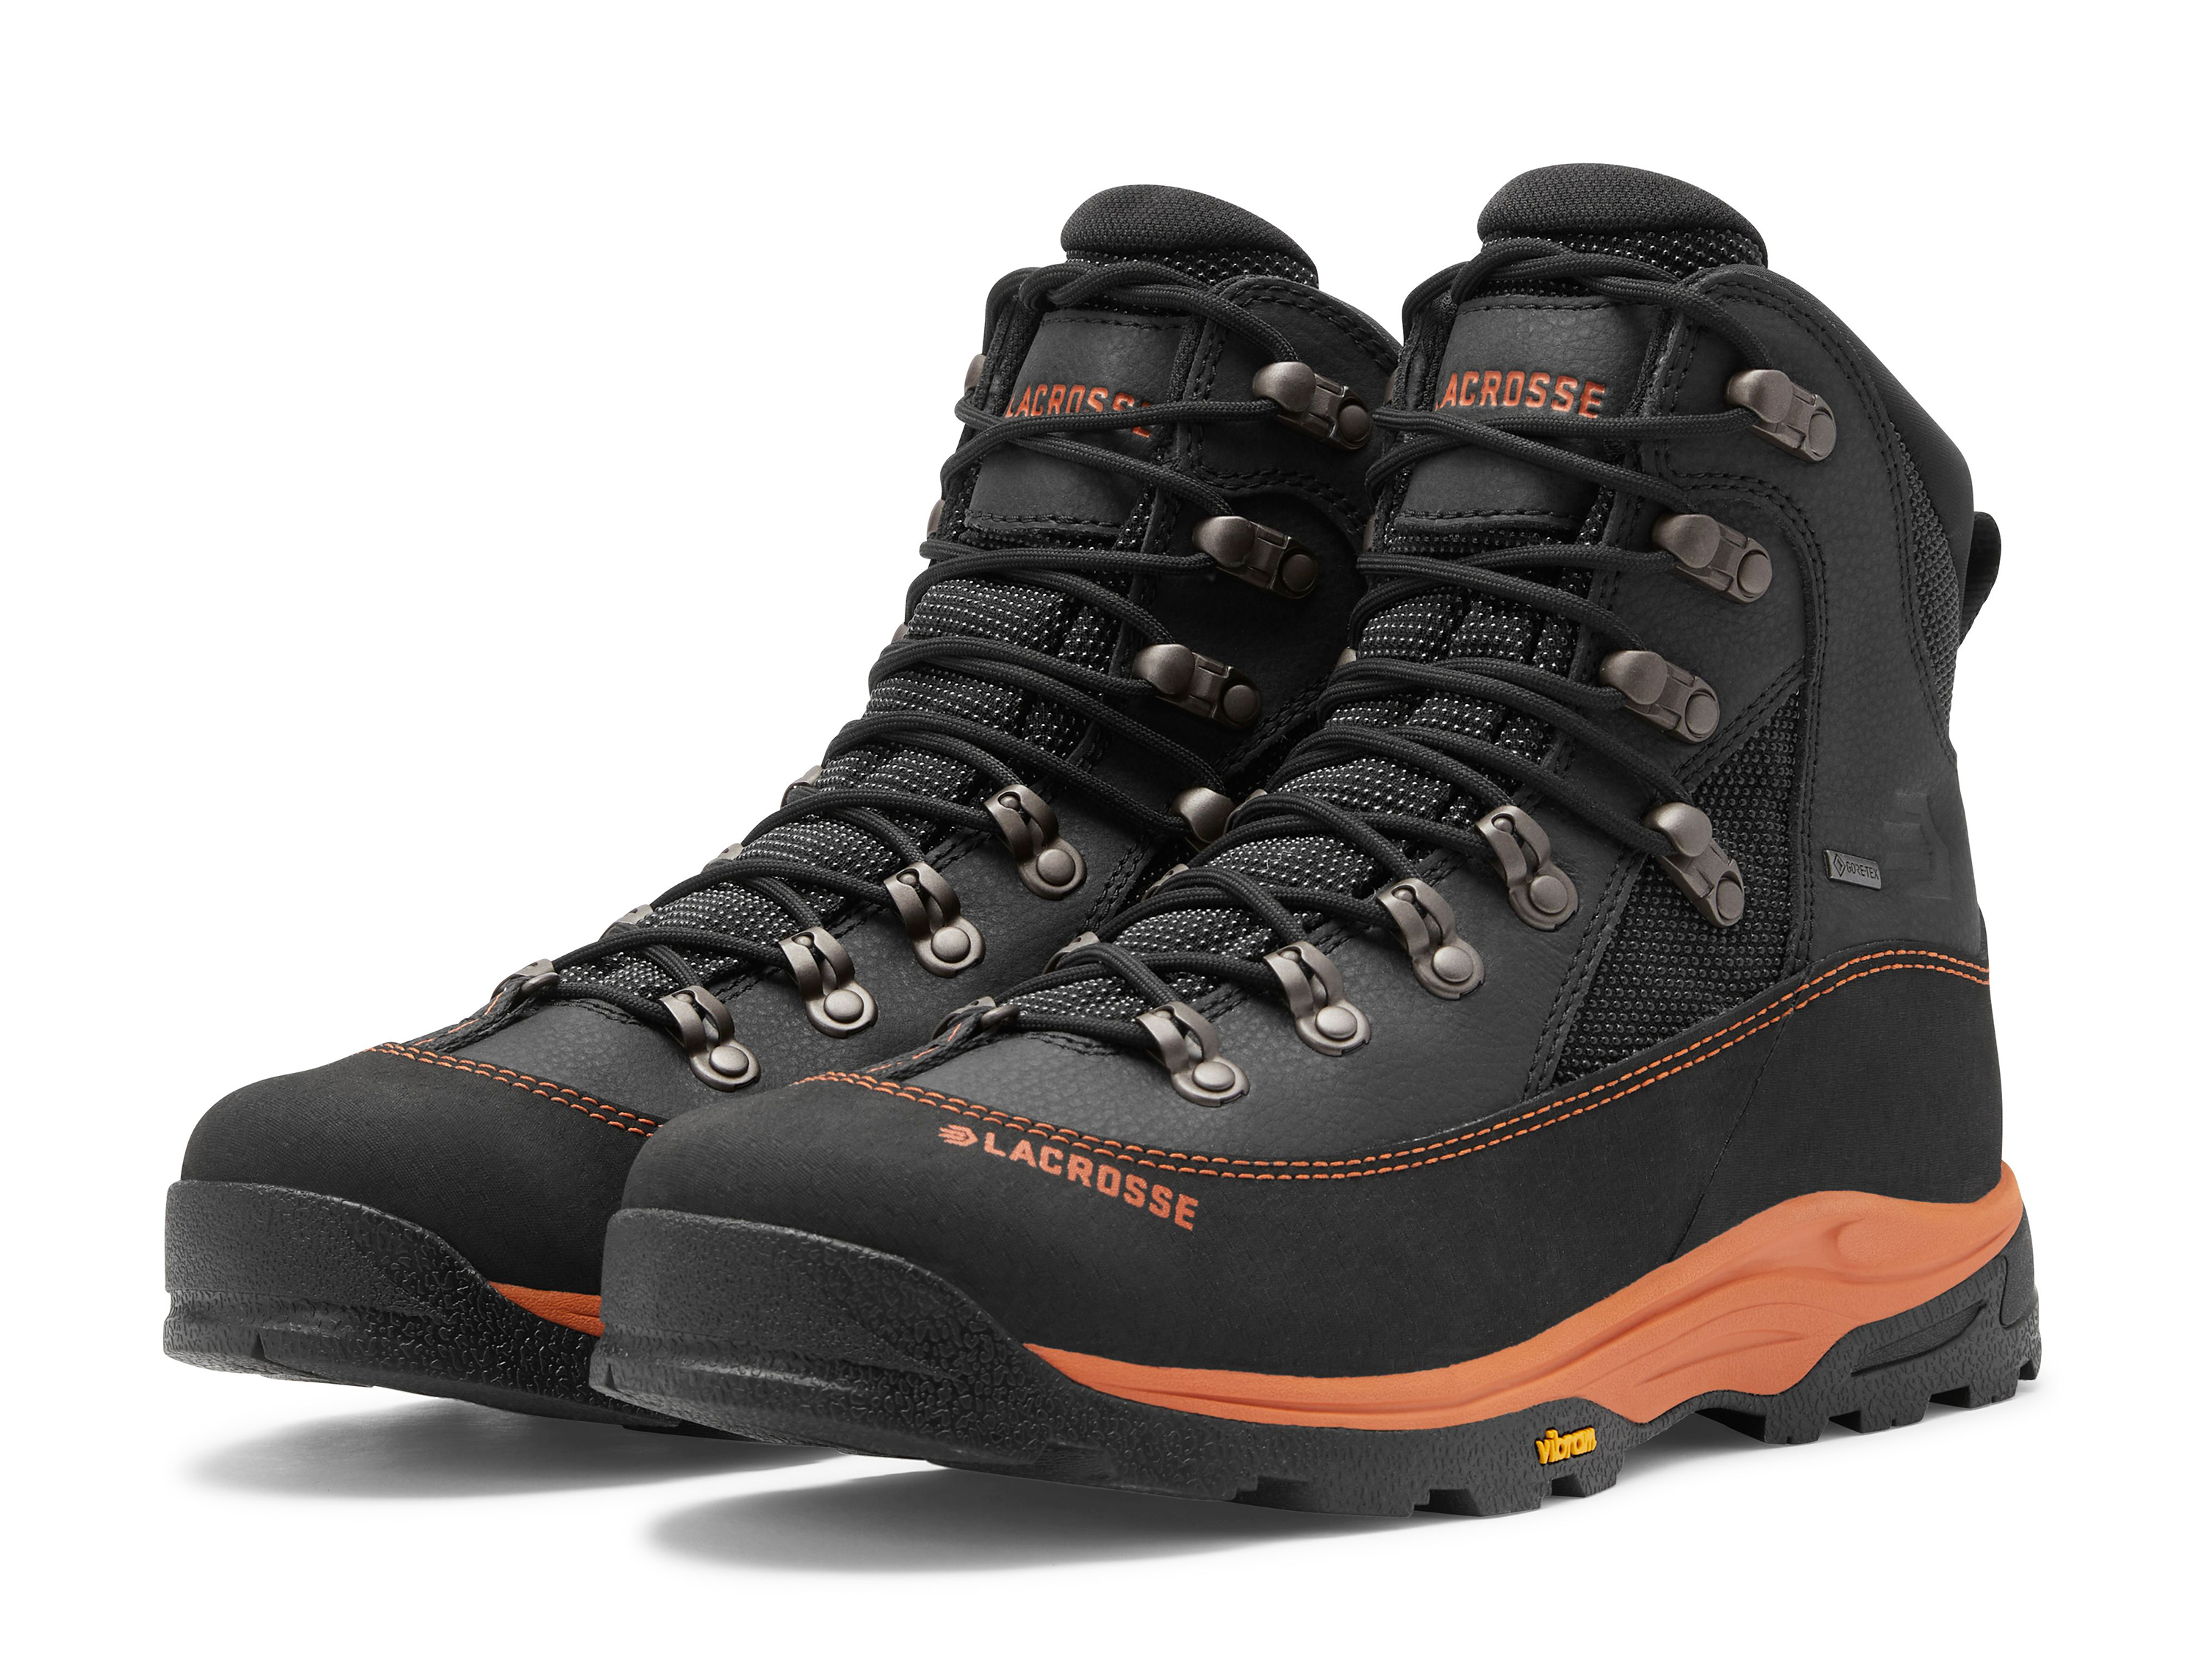 LaCrosse Ursa MS GORE-TEX Hunting Boots for Men - Gunmetal/Orange - 8.5W